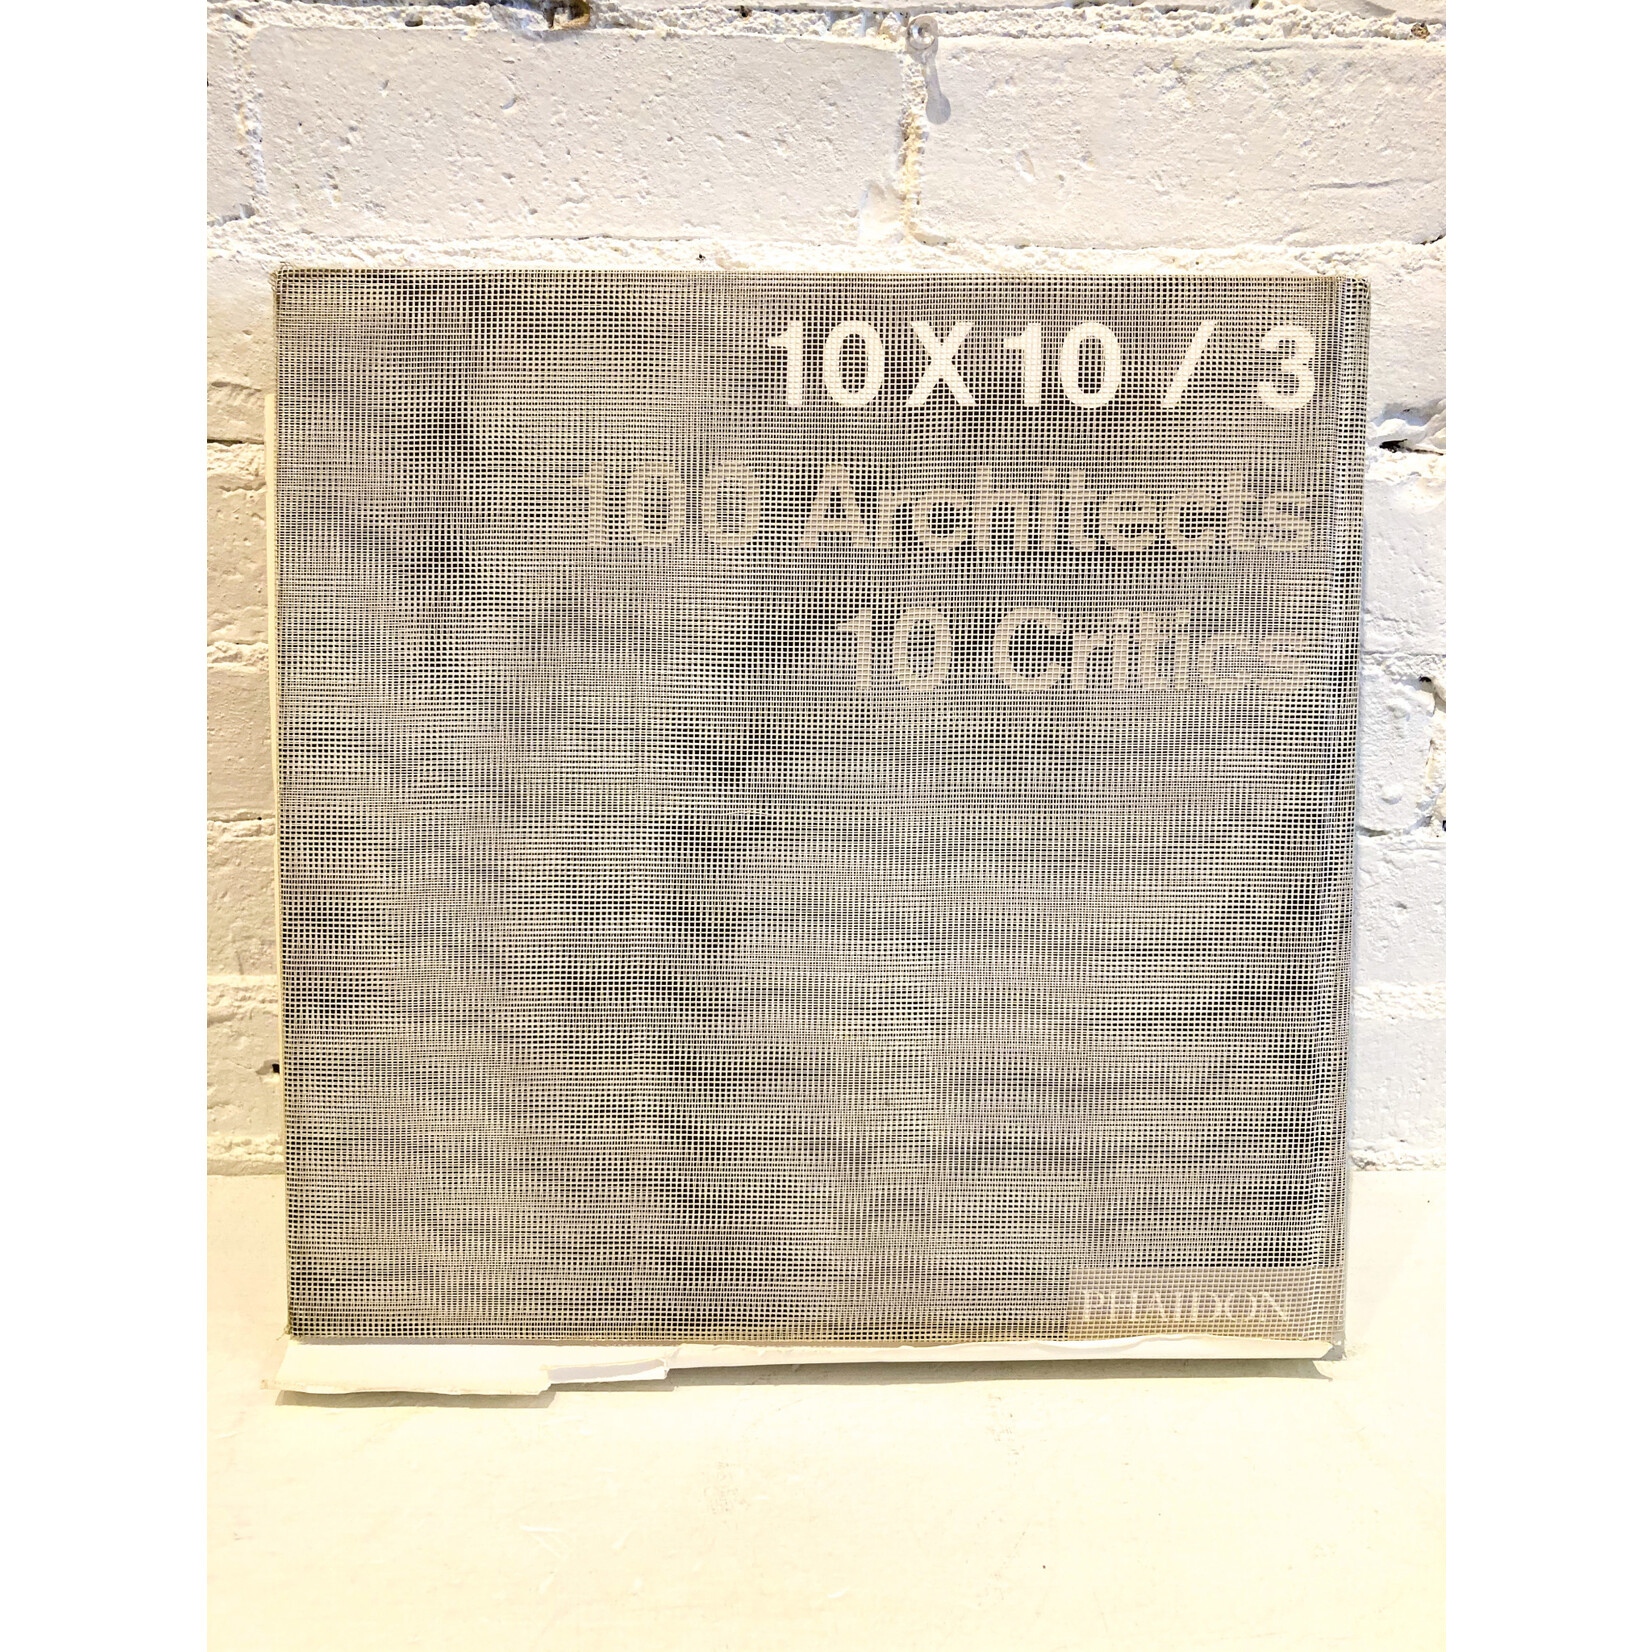 10 X 10 / 3: 100 Architects, 10 Critics